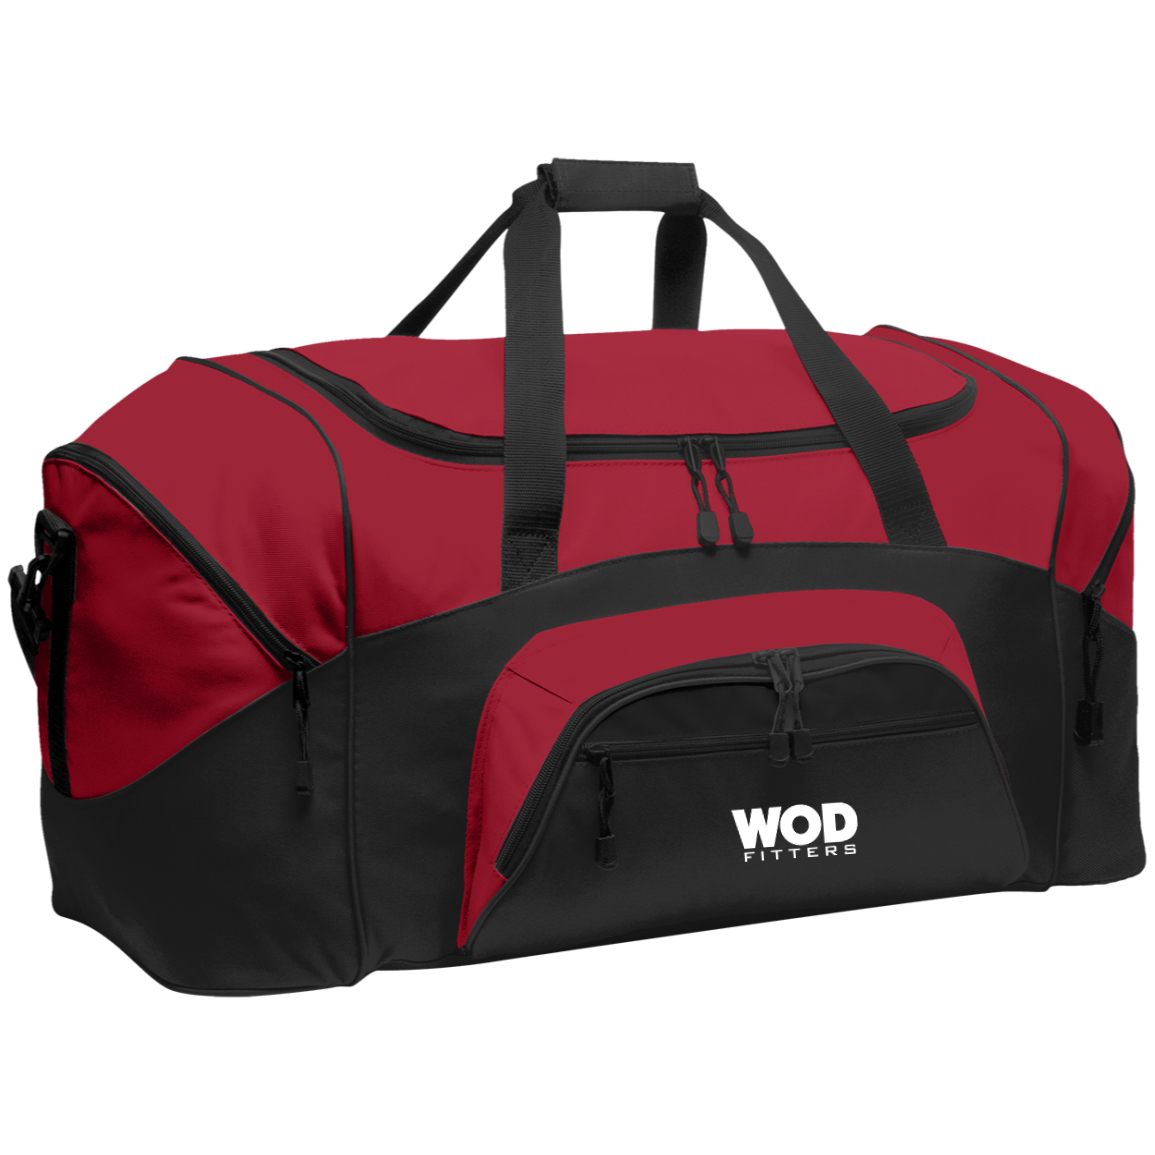 WODFitters  Sport Duffel Gym Bag